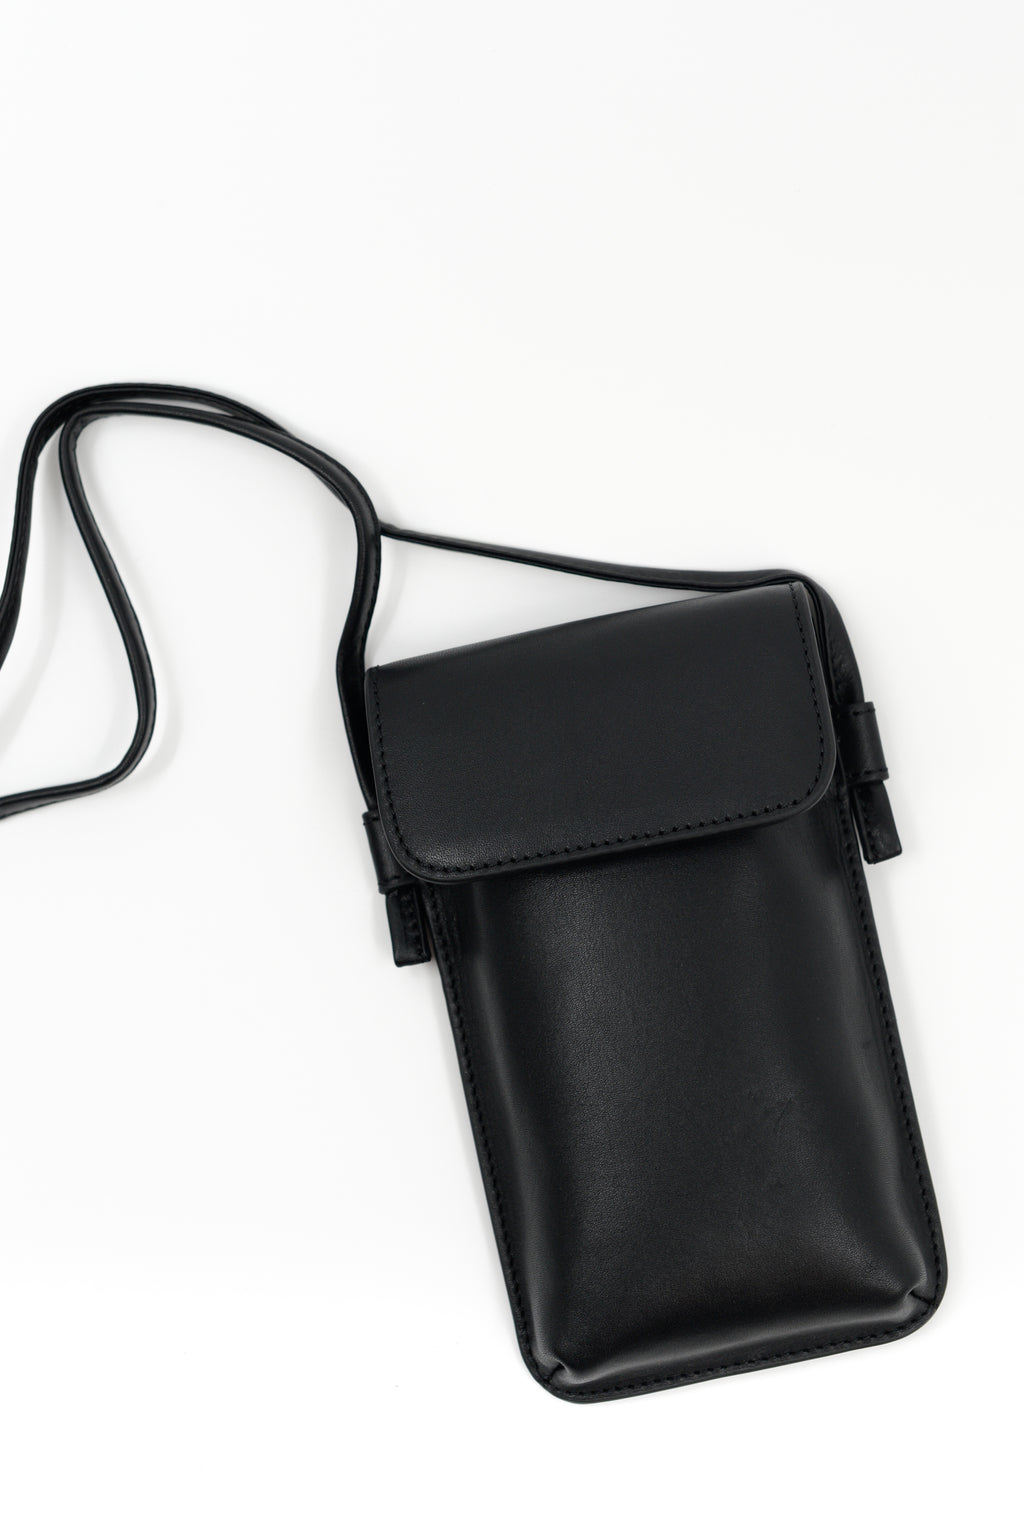 Smartphone bag in black nappa leather